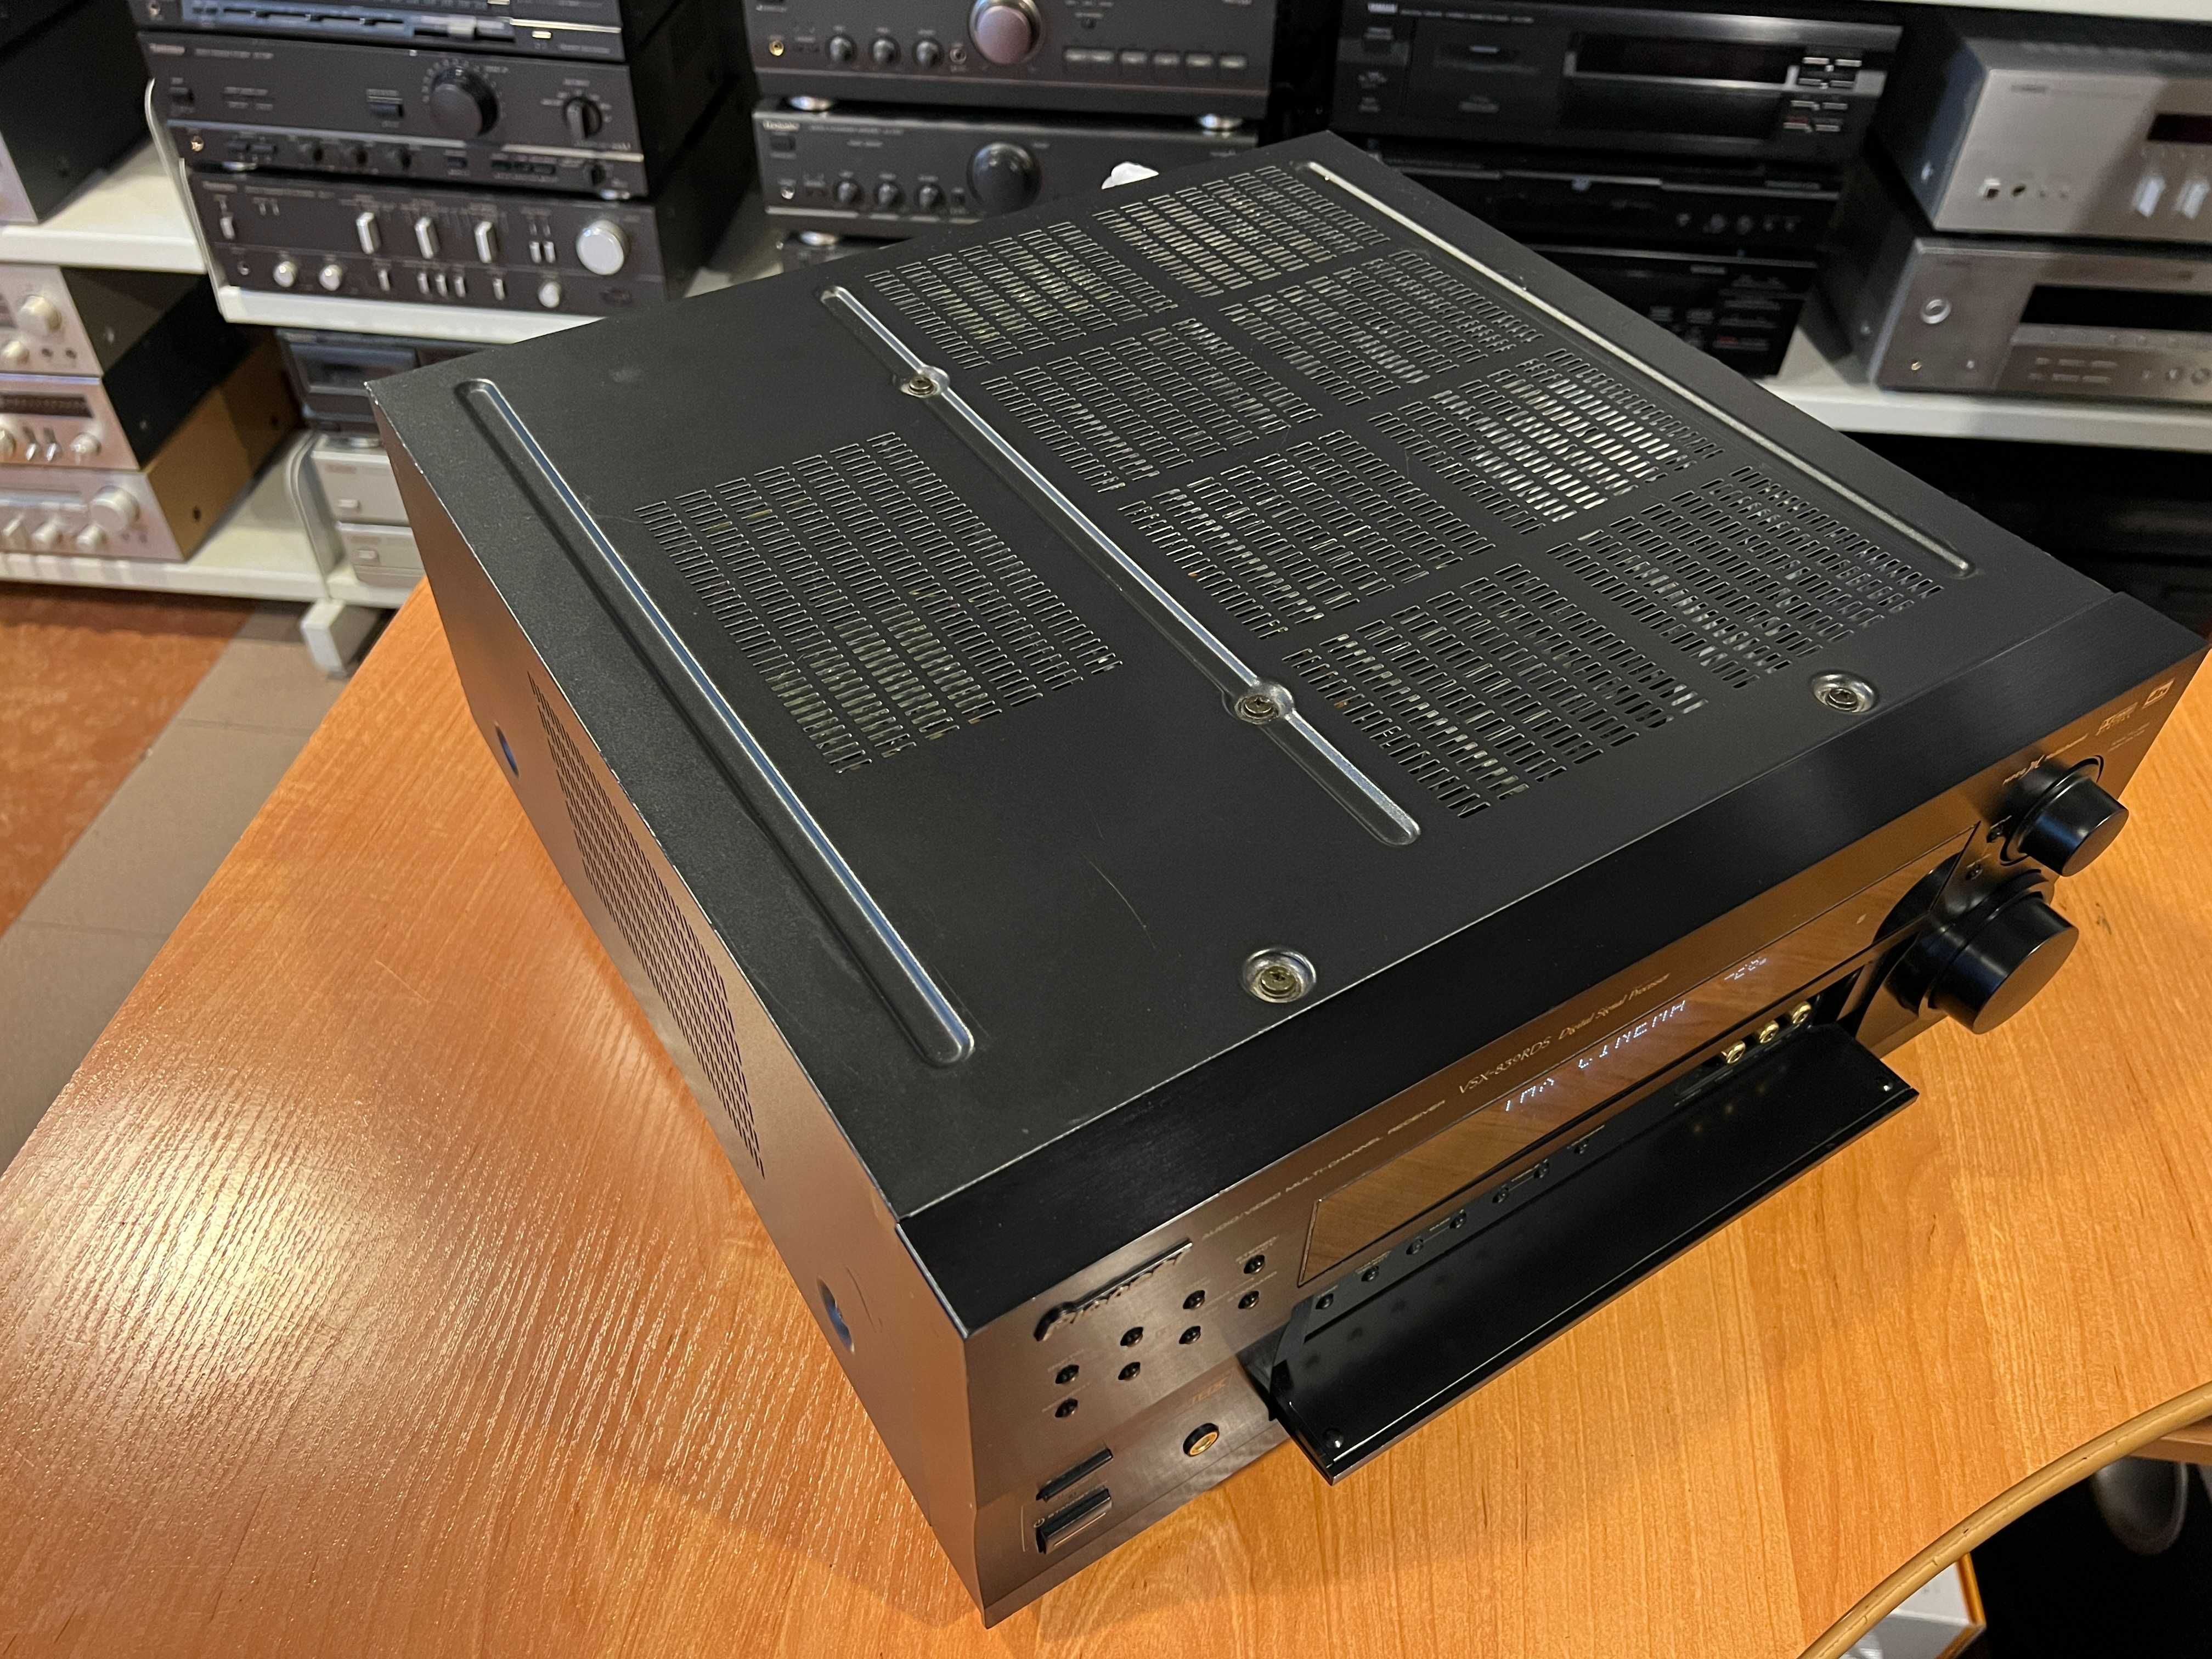 Amplituner Pioneer VSX-839 THX Dolby Audio Room